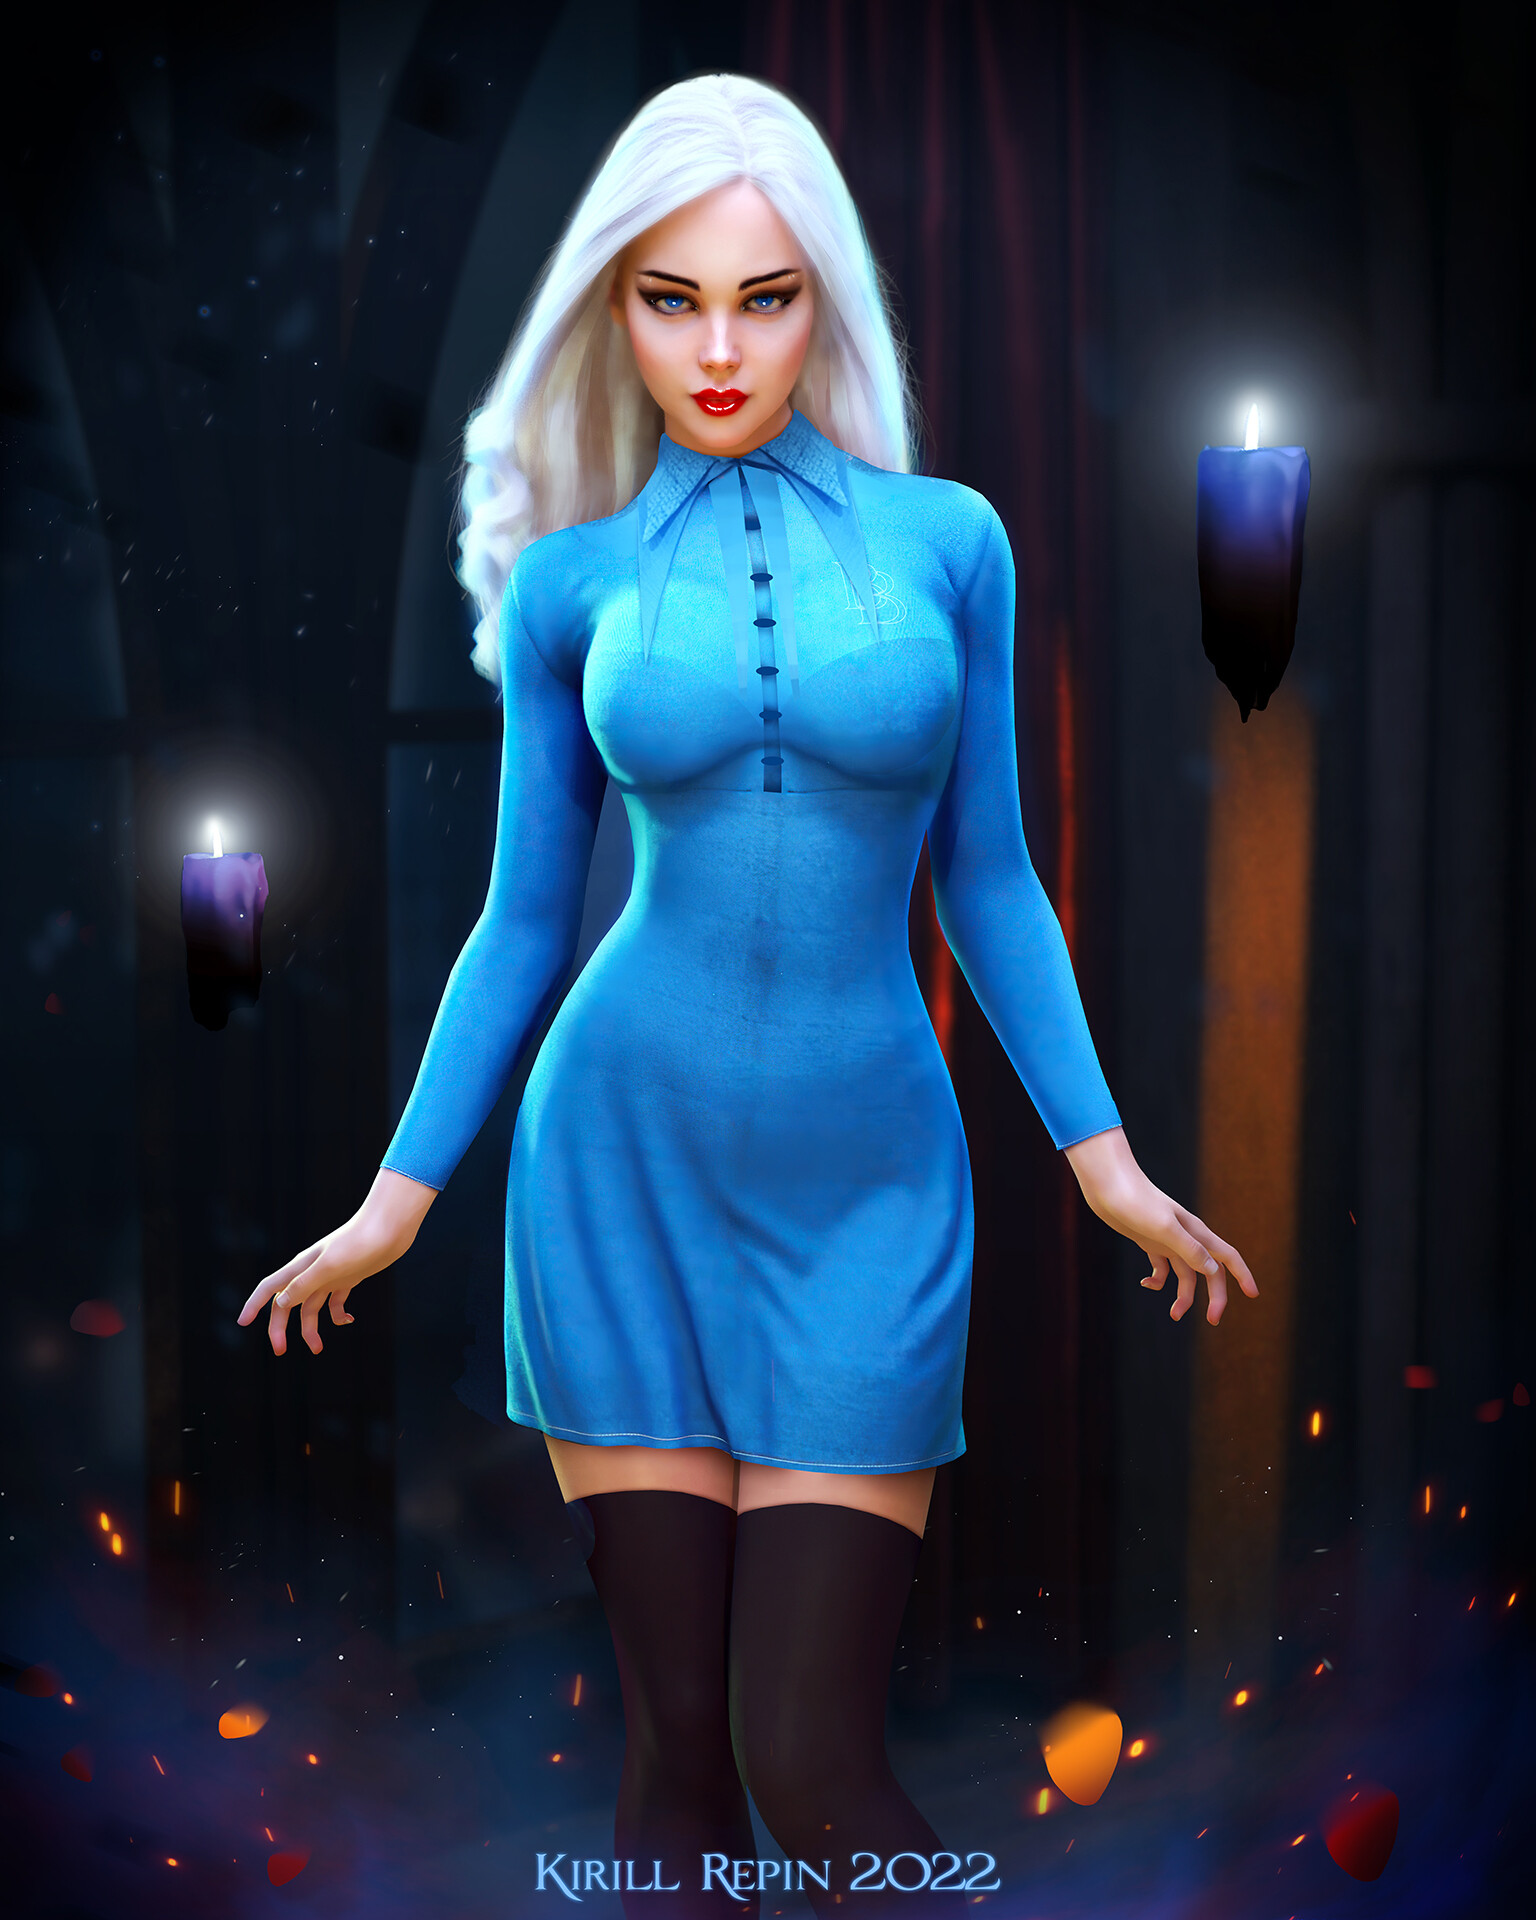 Kirill Repin Women Blonde Fleur Delacour Harry Potter Long Hair Thigh Highs Dress Blue Clothing Dark 1536x1920